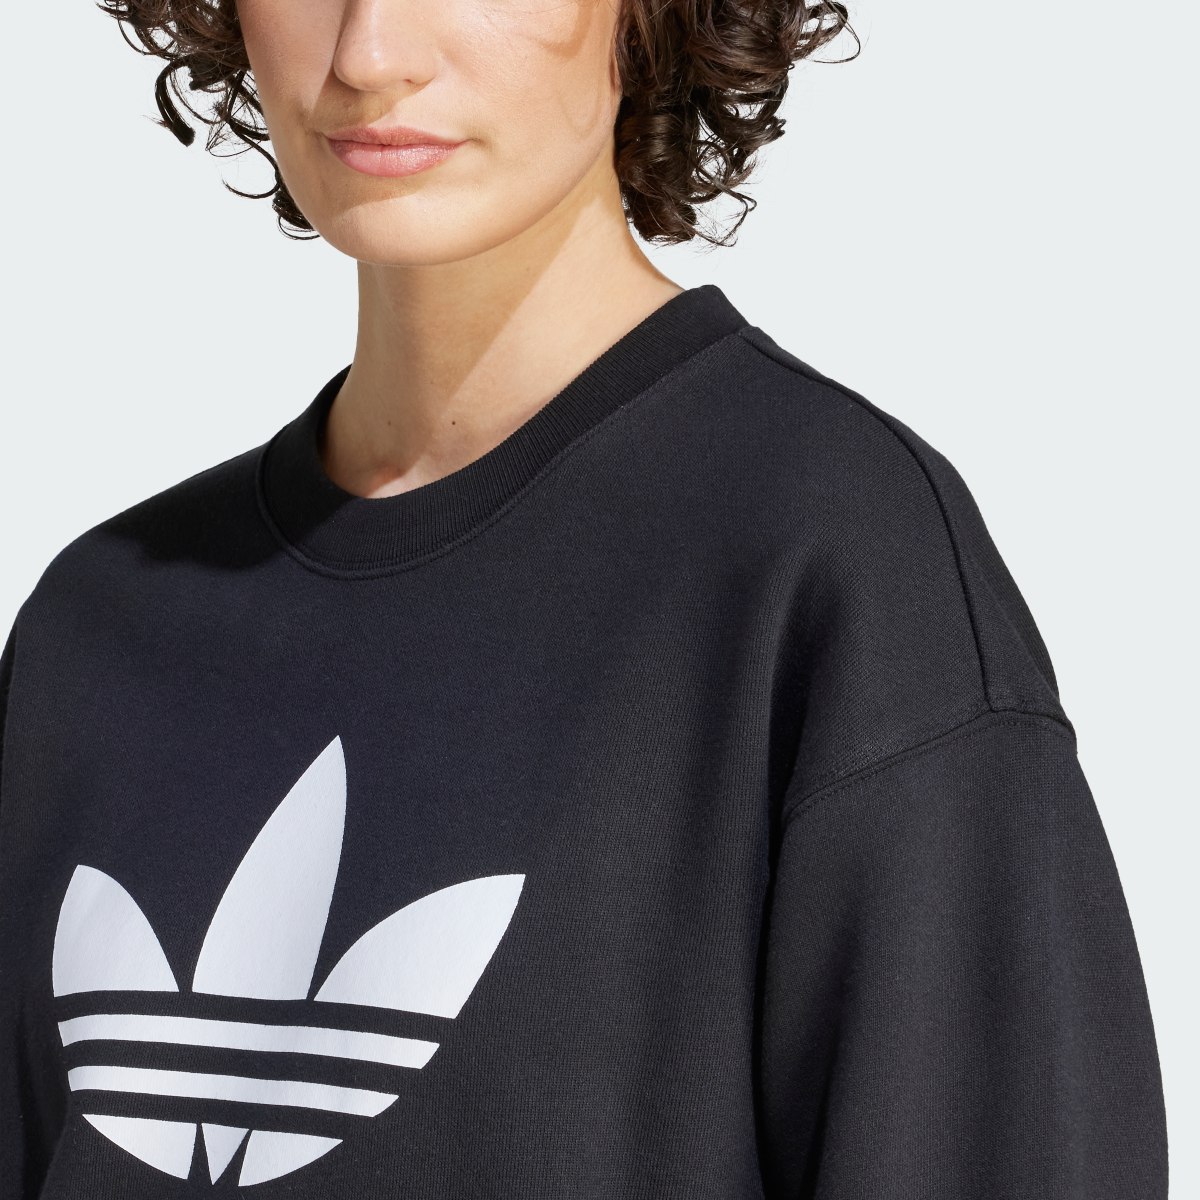 Adidas Trefoil Sweatshirt. 6